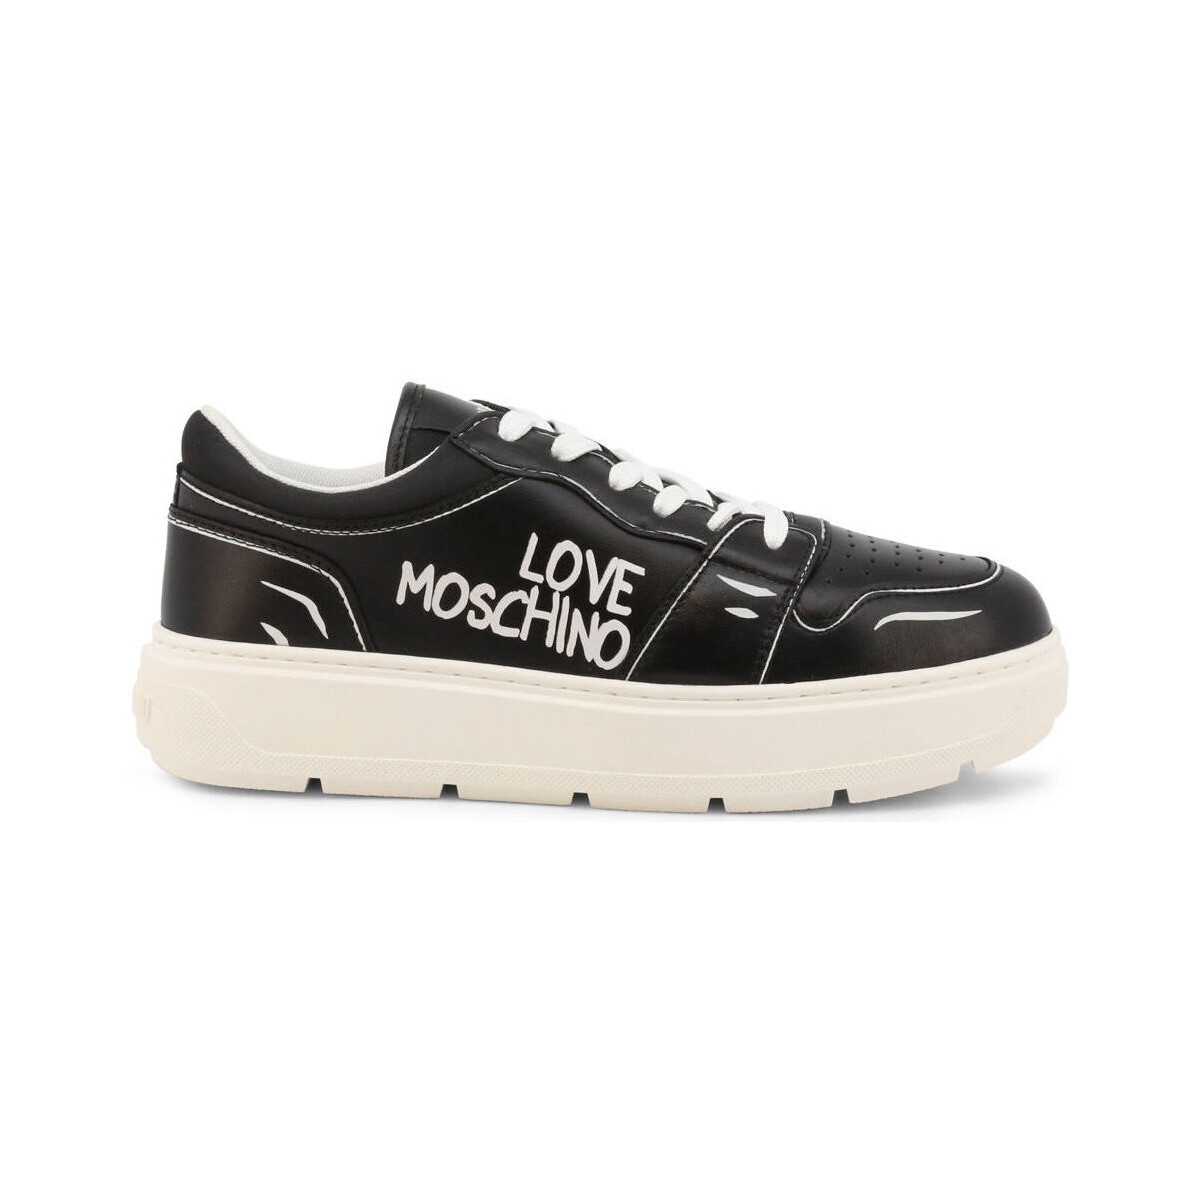 Sko Dame Sneakers Love Moschino - ja15254g1giaa Sort